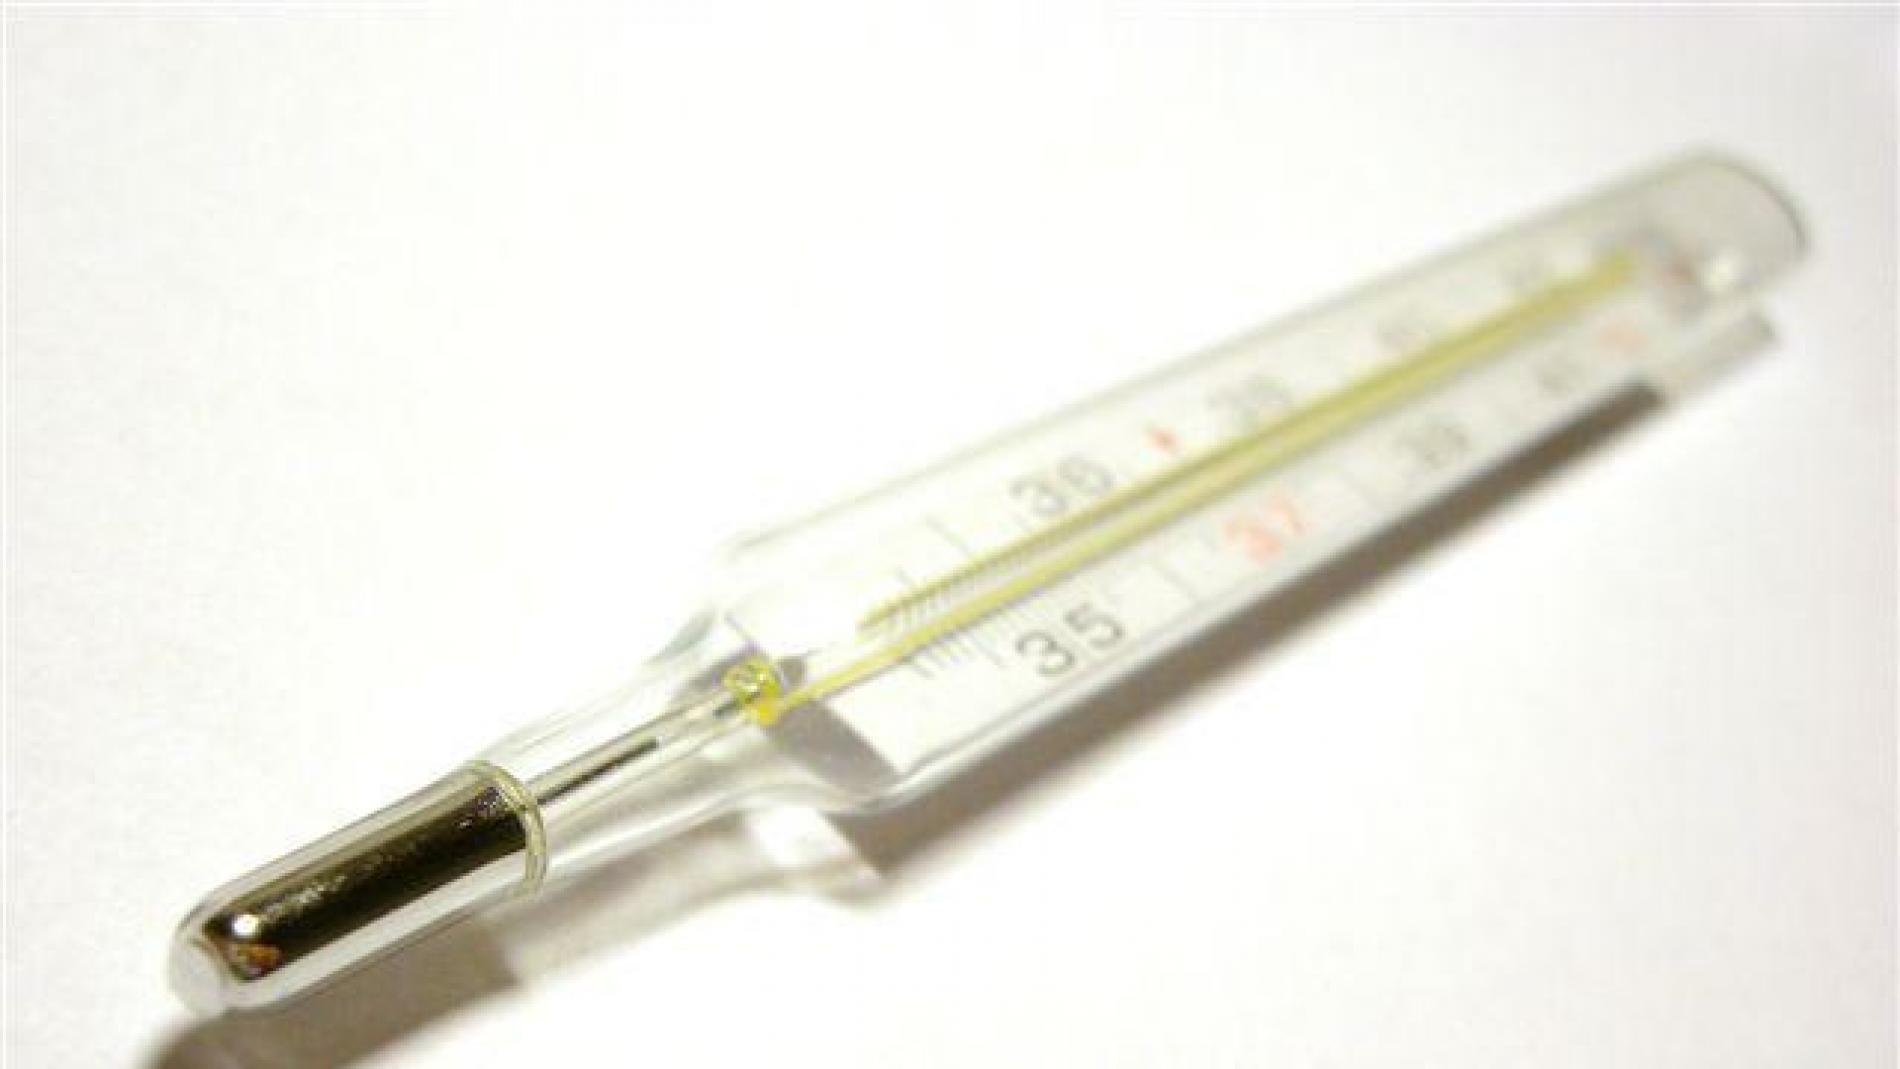 Si sigues usando termómetro de mercurio debes deshacerte de él